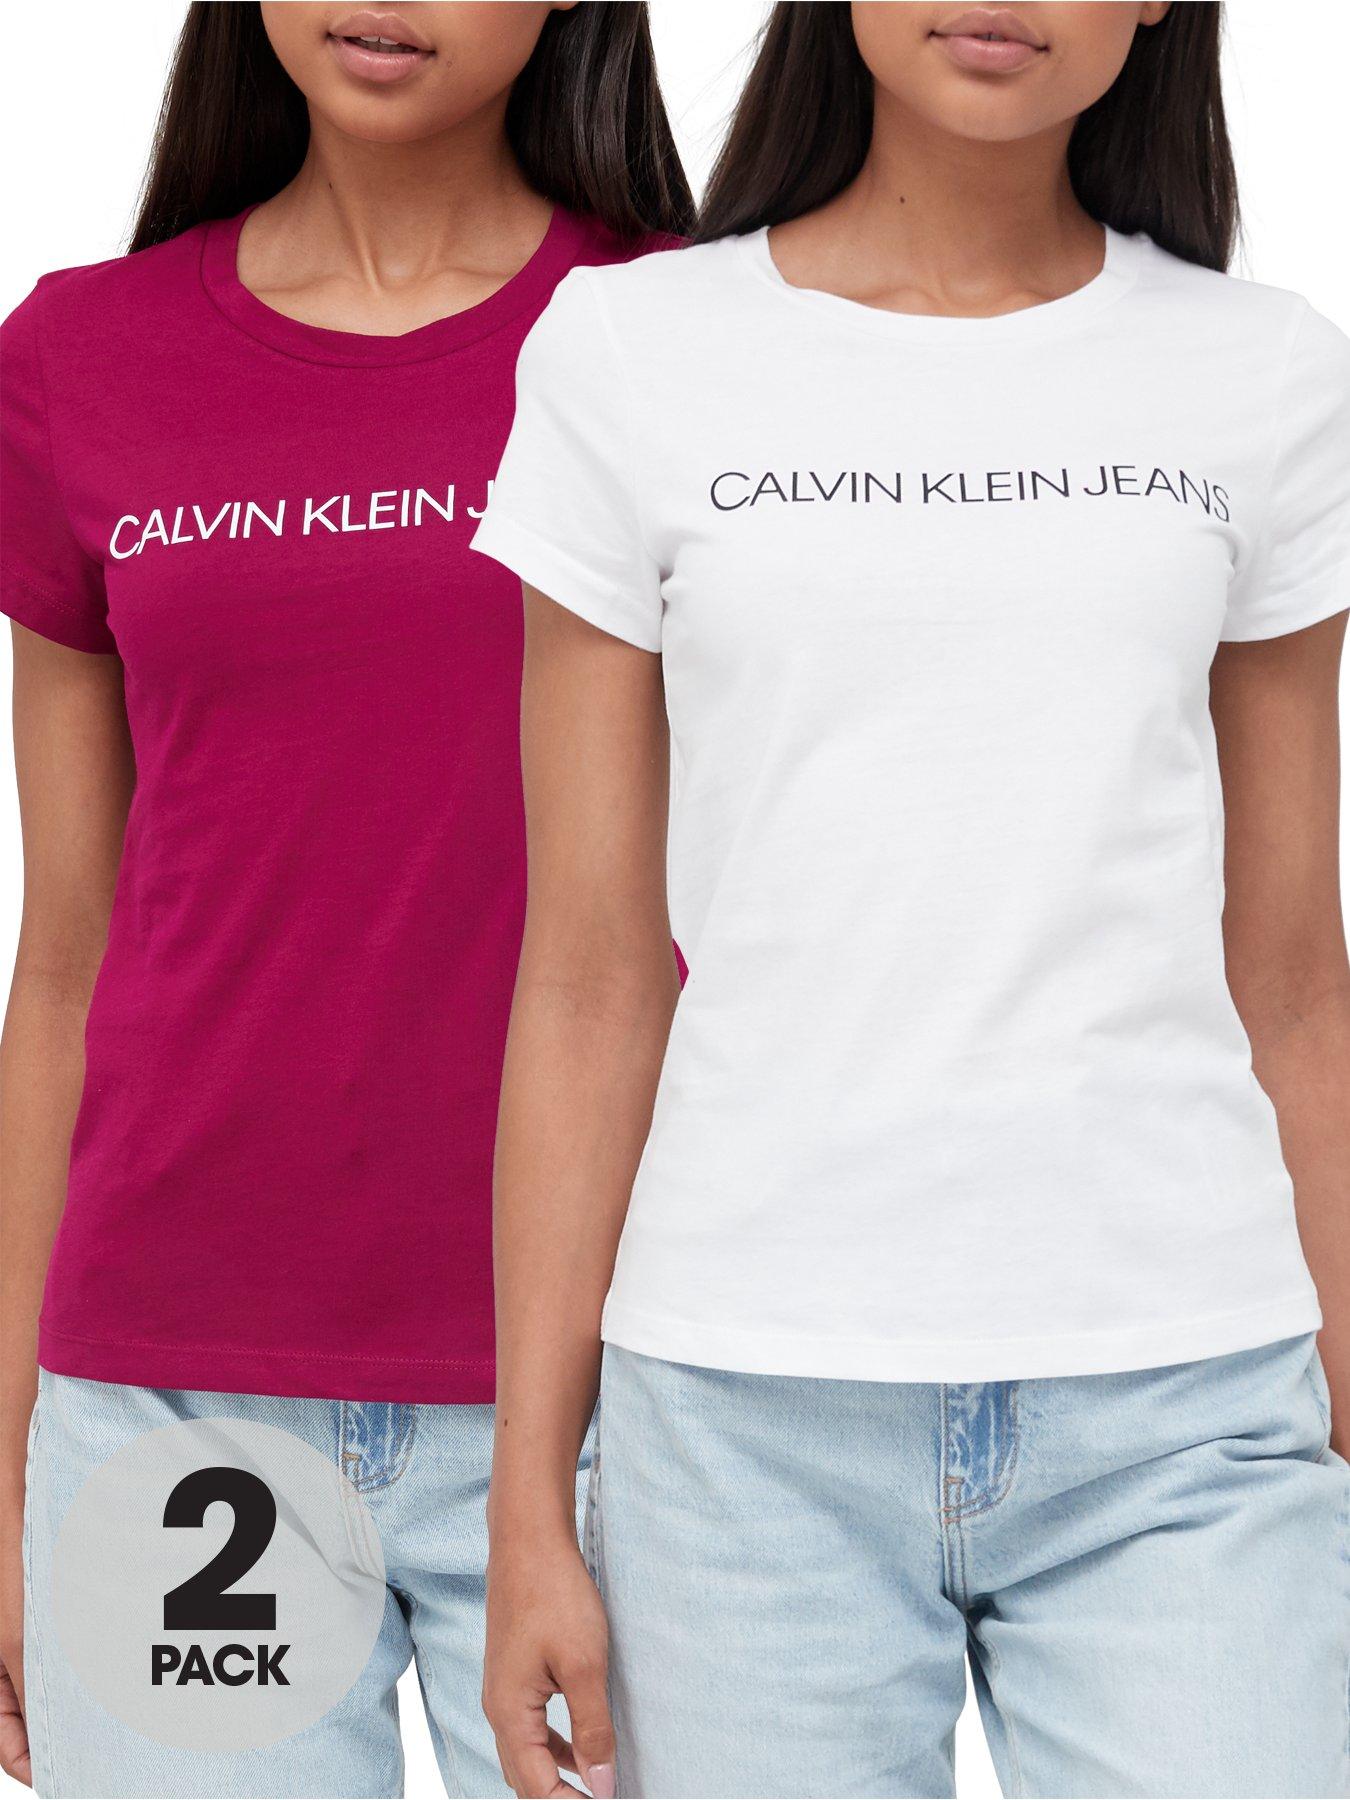 Calvin klein | & t-shirts | Women | www.very.co.uk